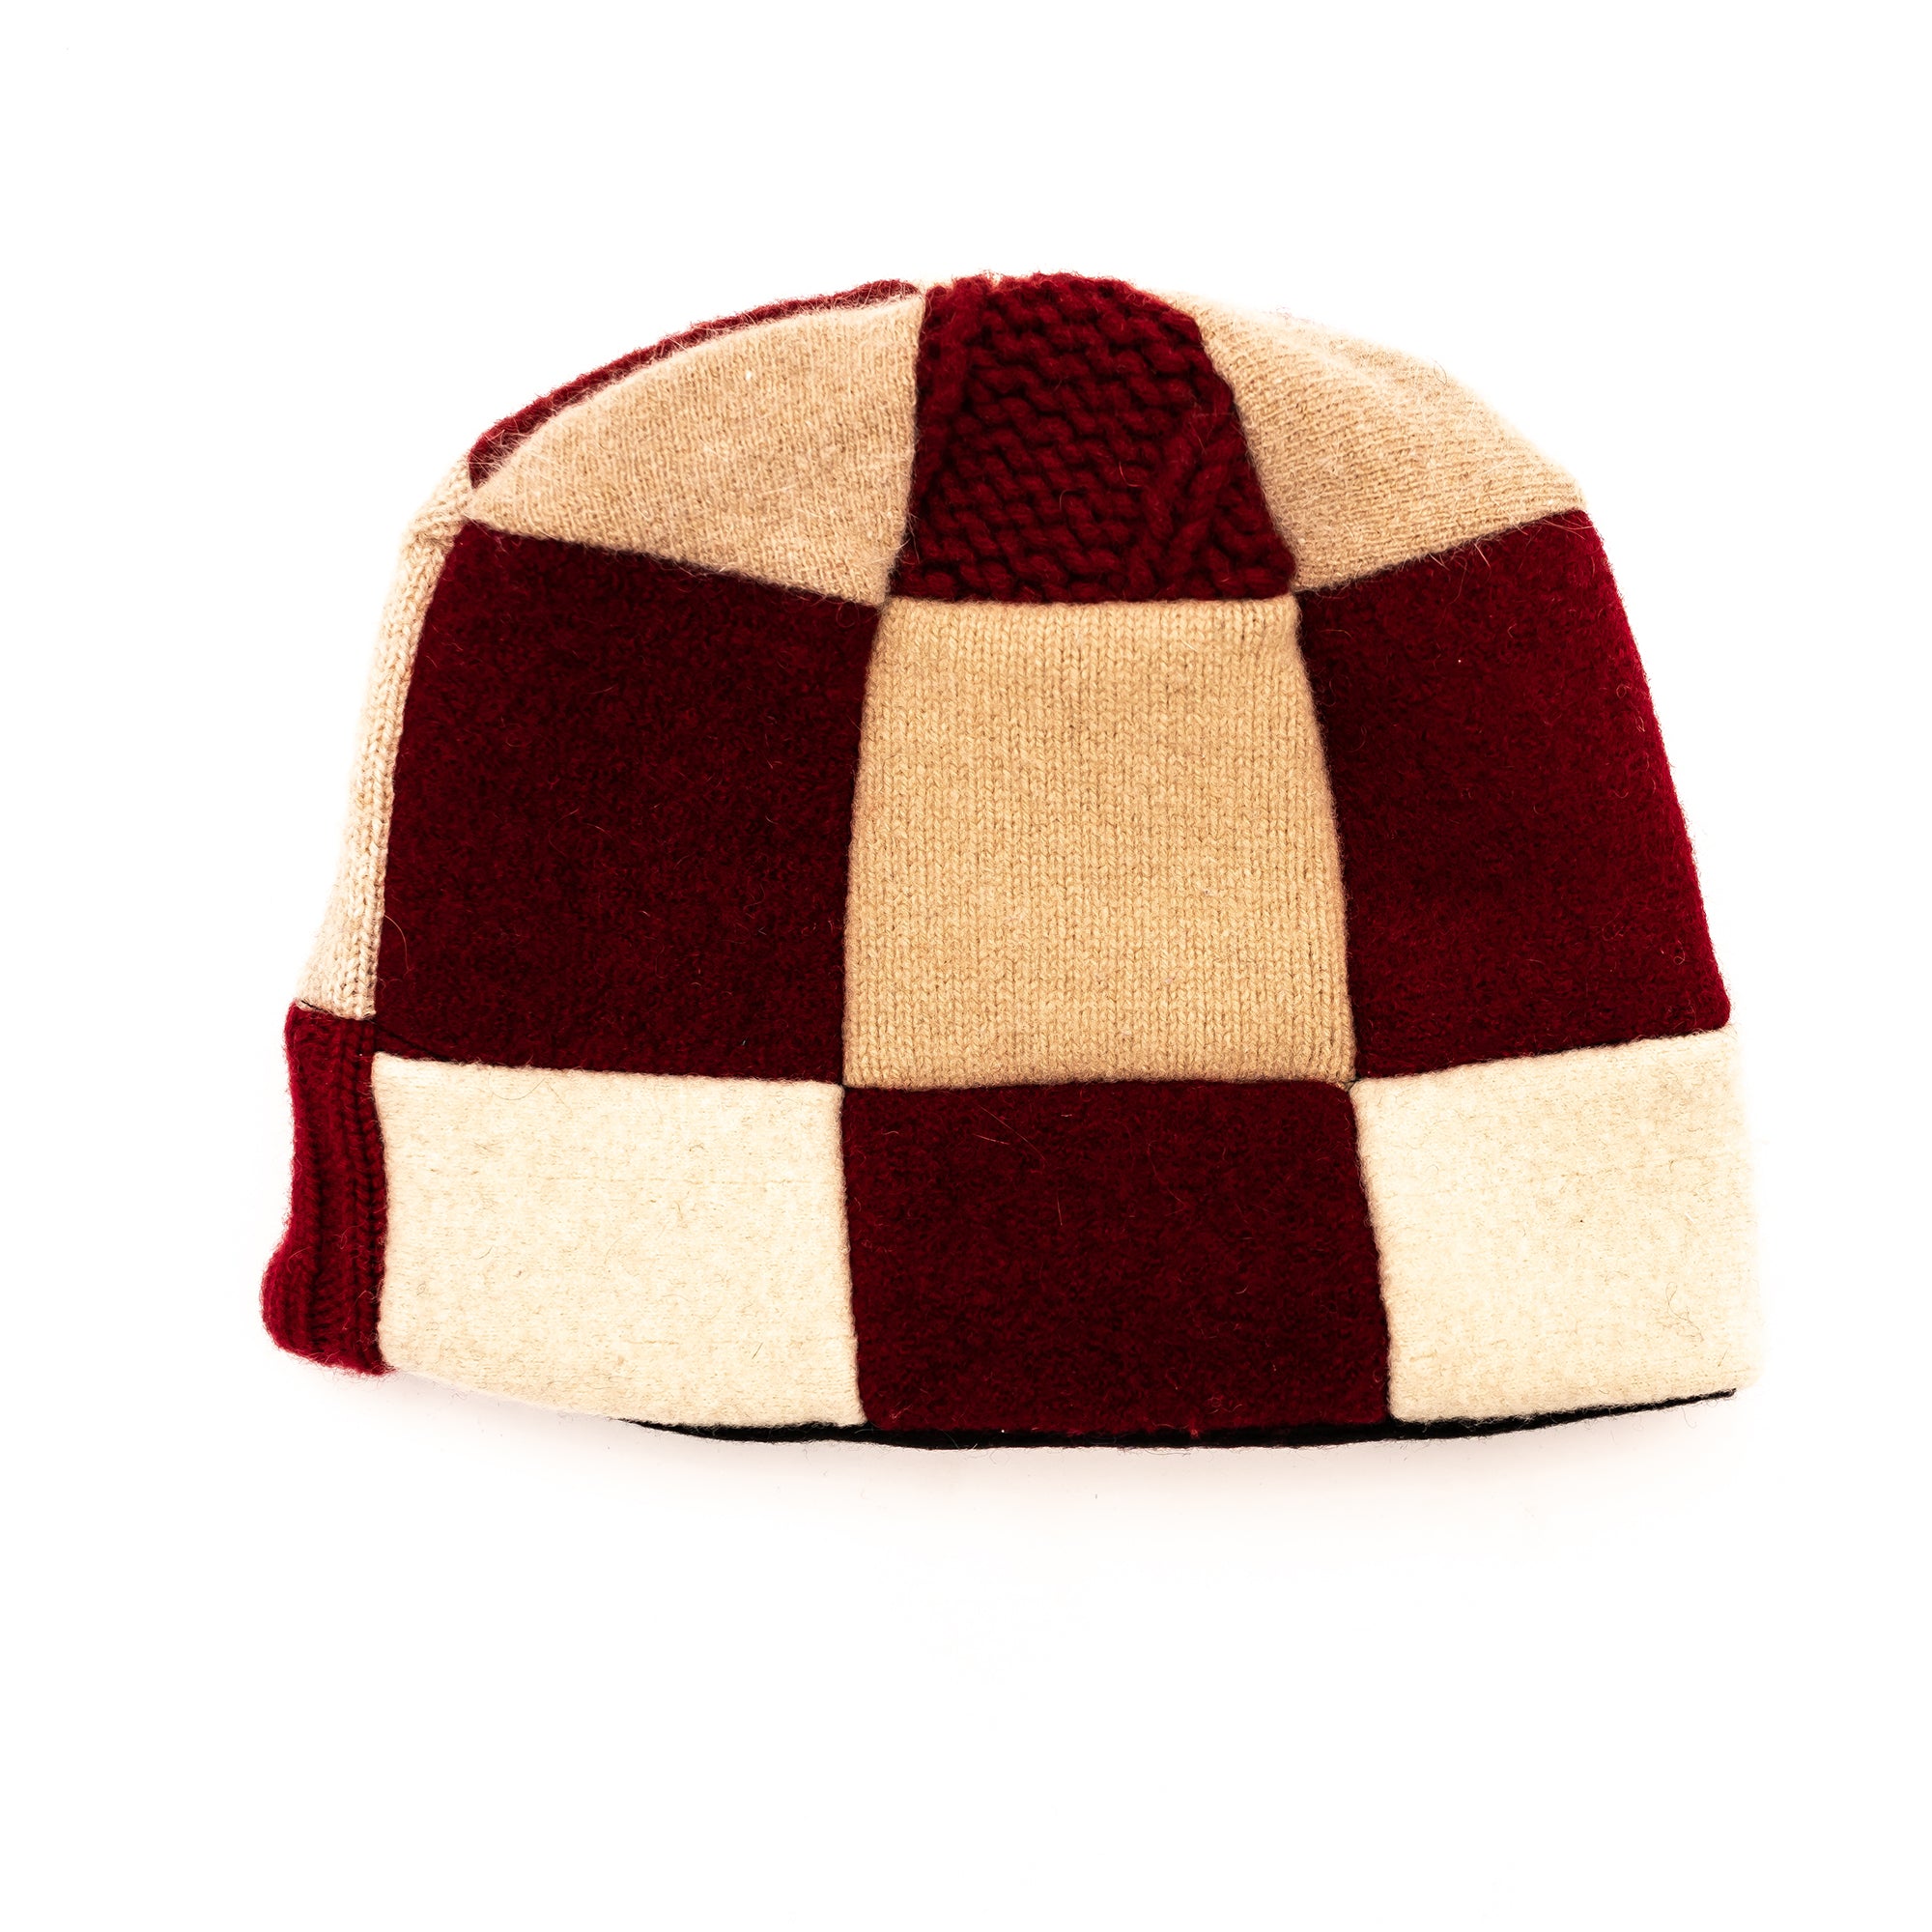 Wool Hat, Woolen Hat, Upcycled Wool Hat, Wool Sweater Hat